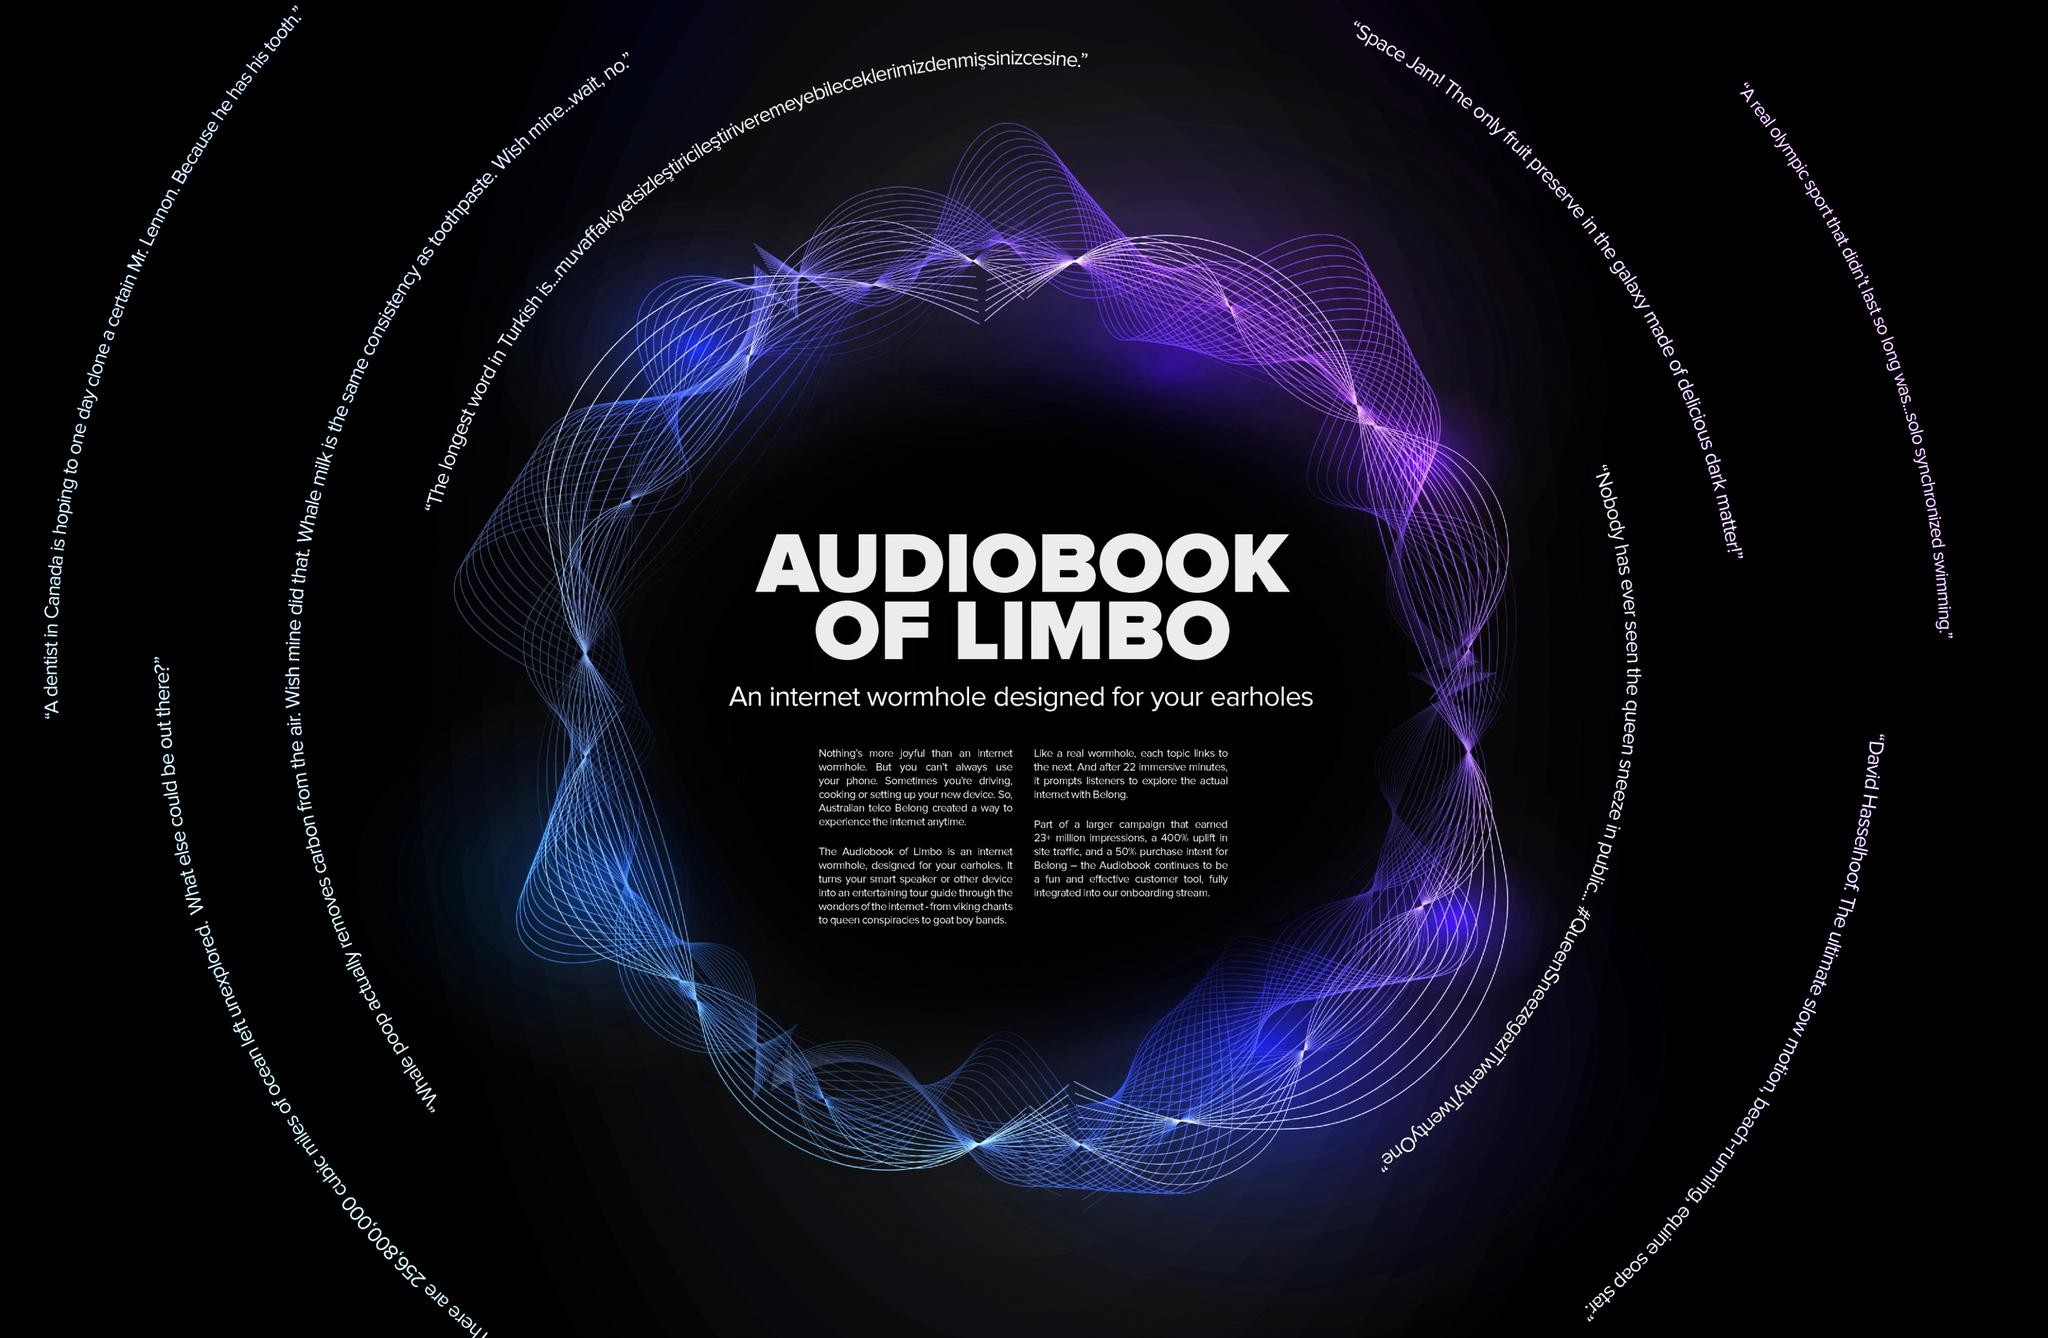 Audiobook of Limbo